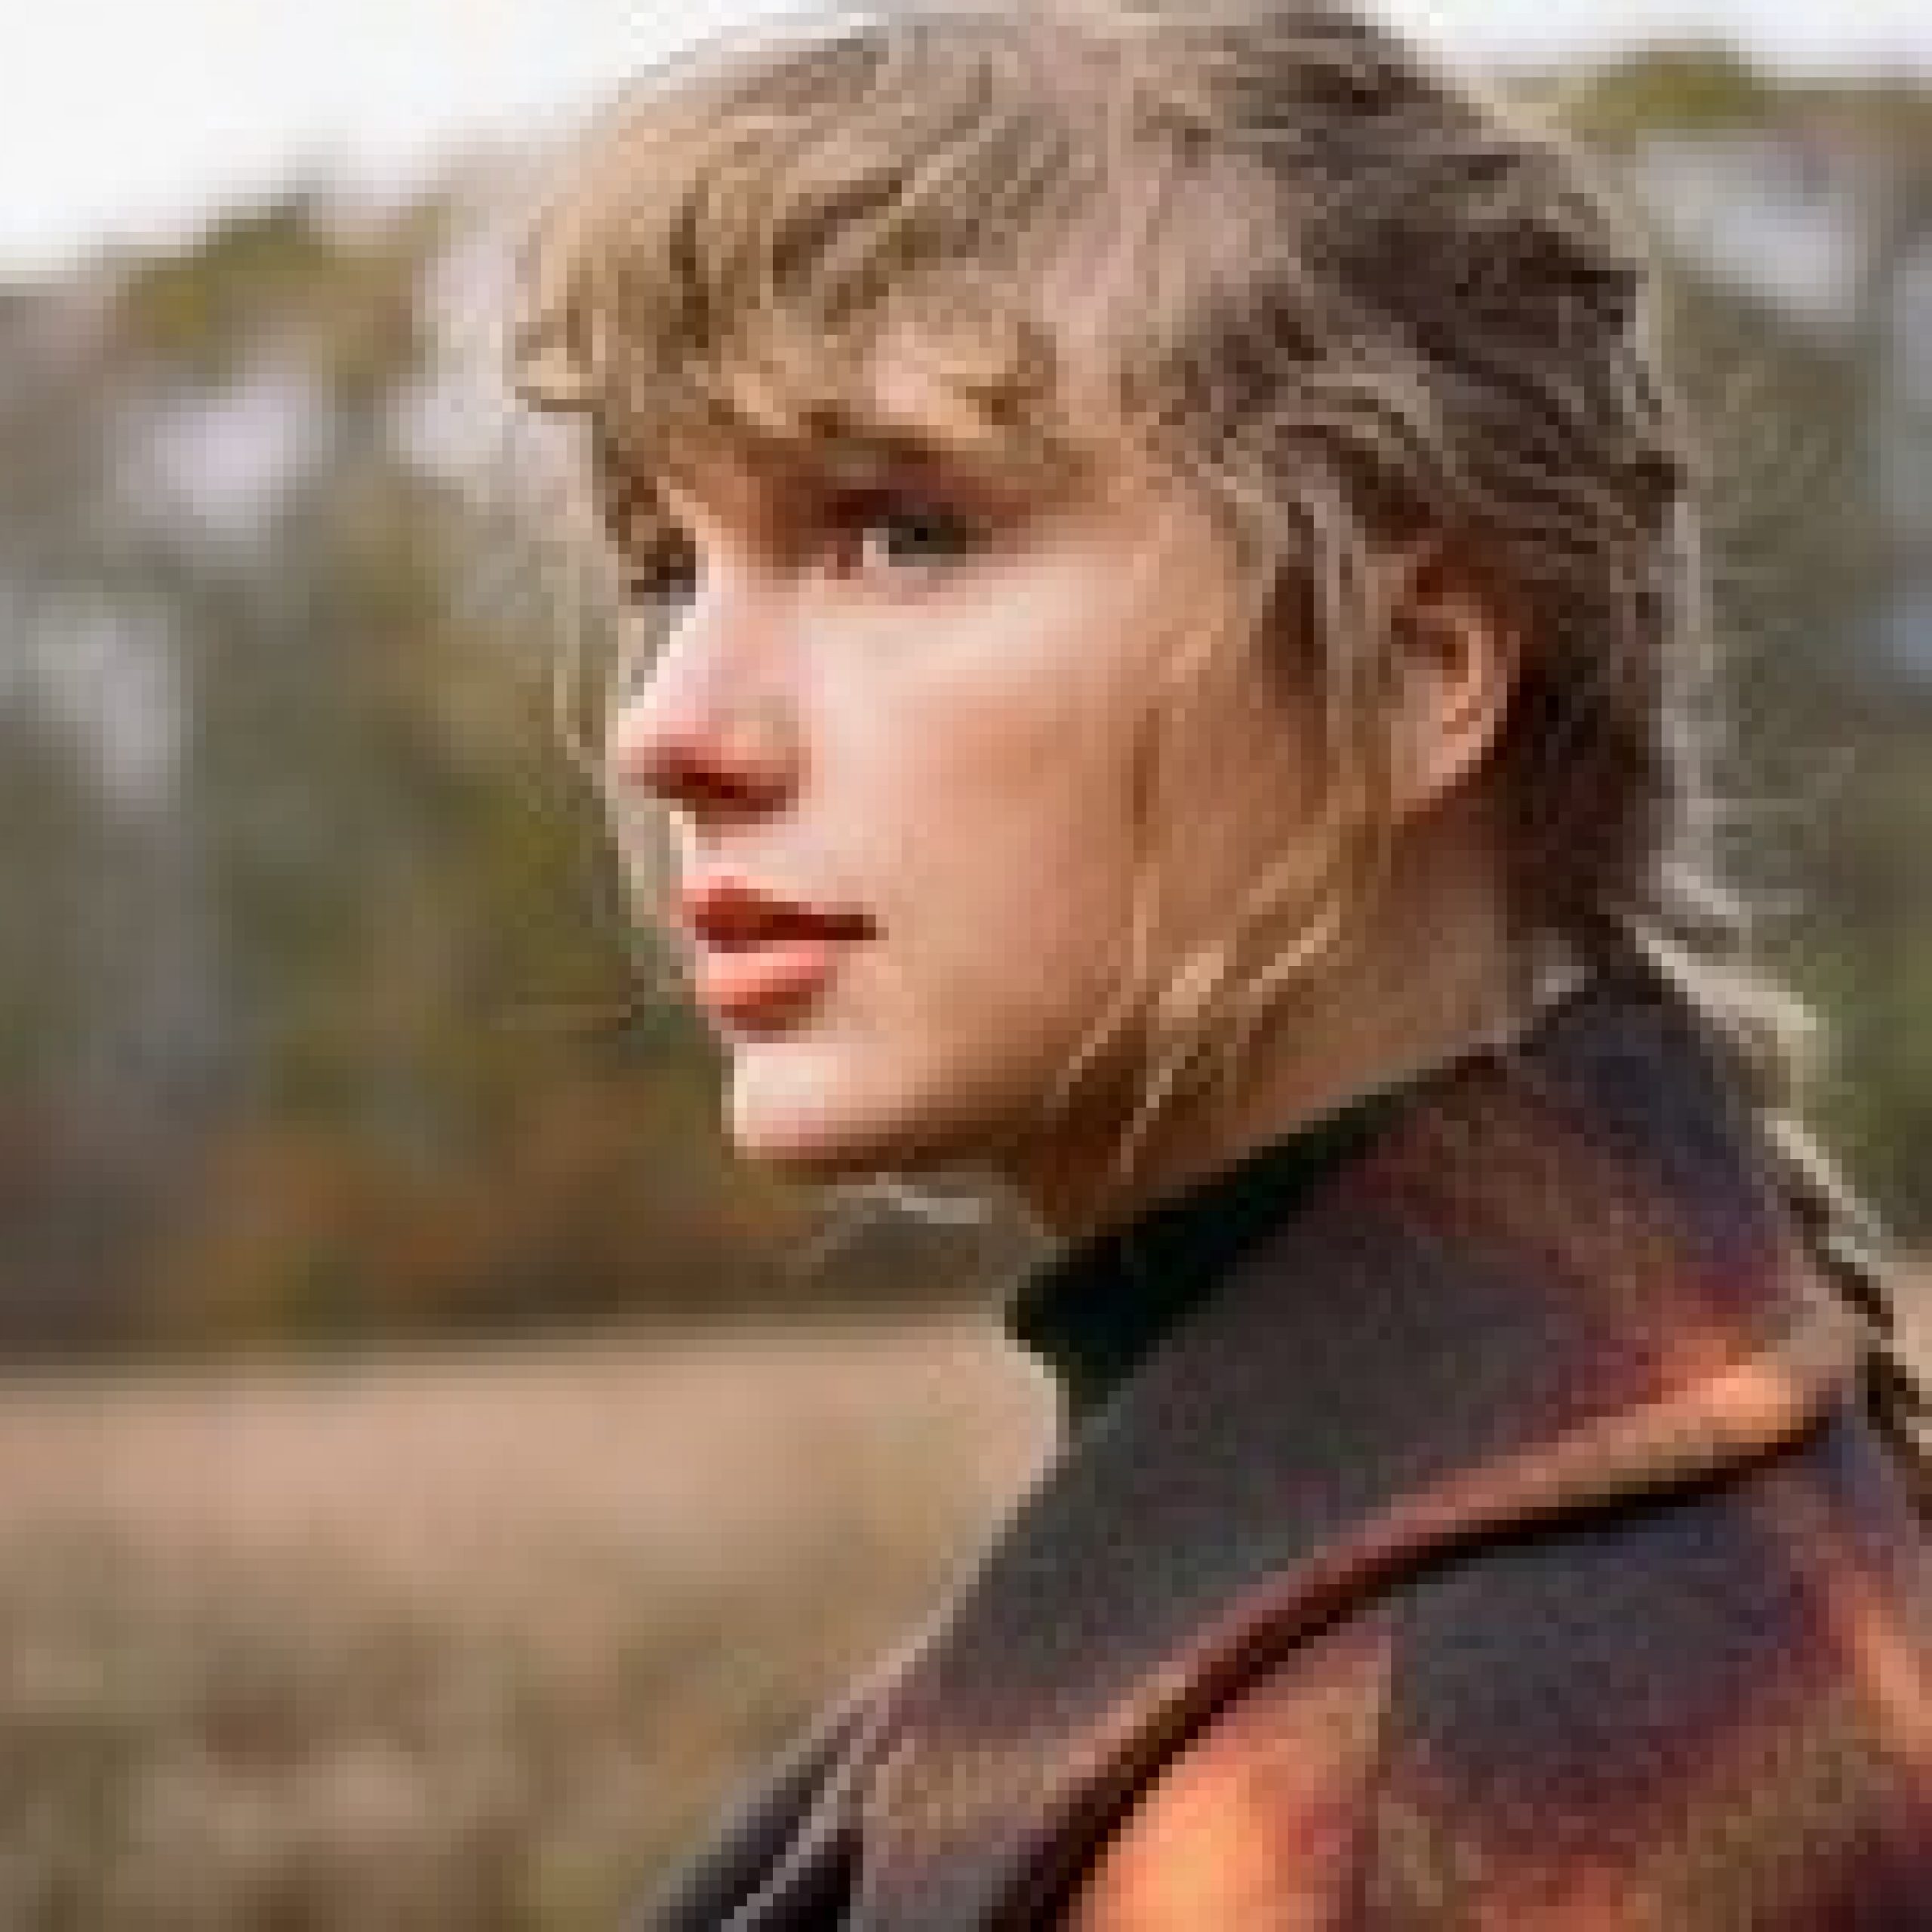 Taylor Swift’s ‘Evermore’ Breaks Modern-Era Record for Biggest Vinyl Album Sales Week